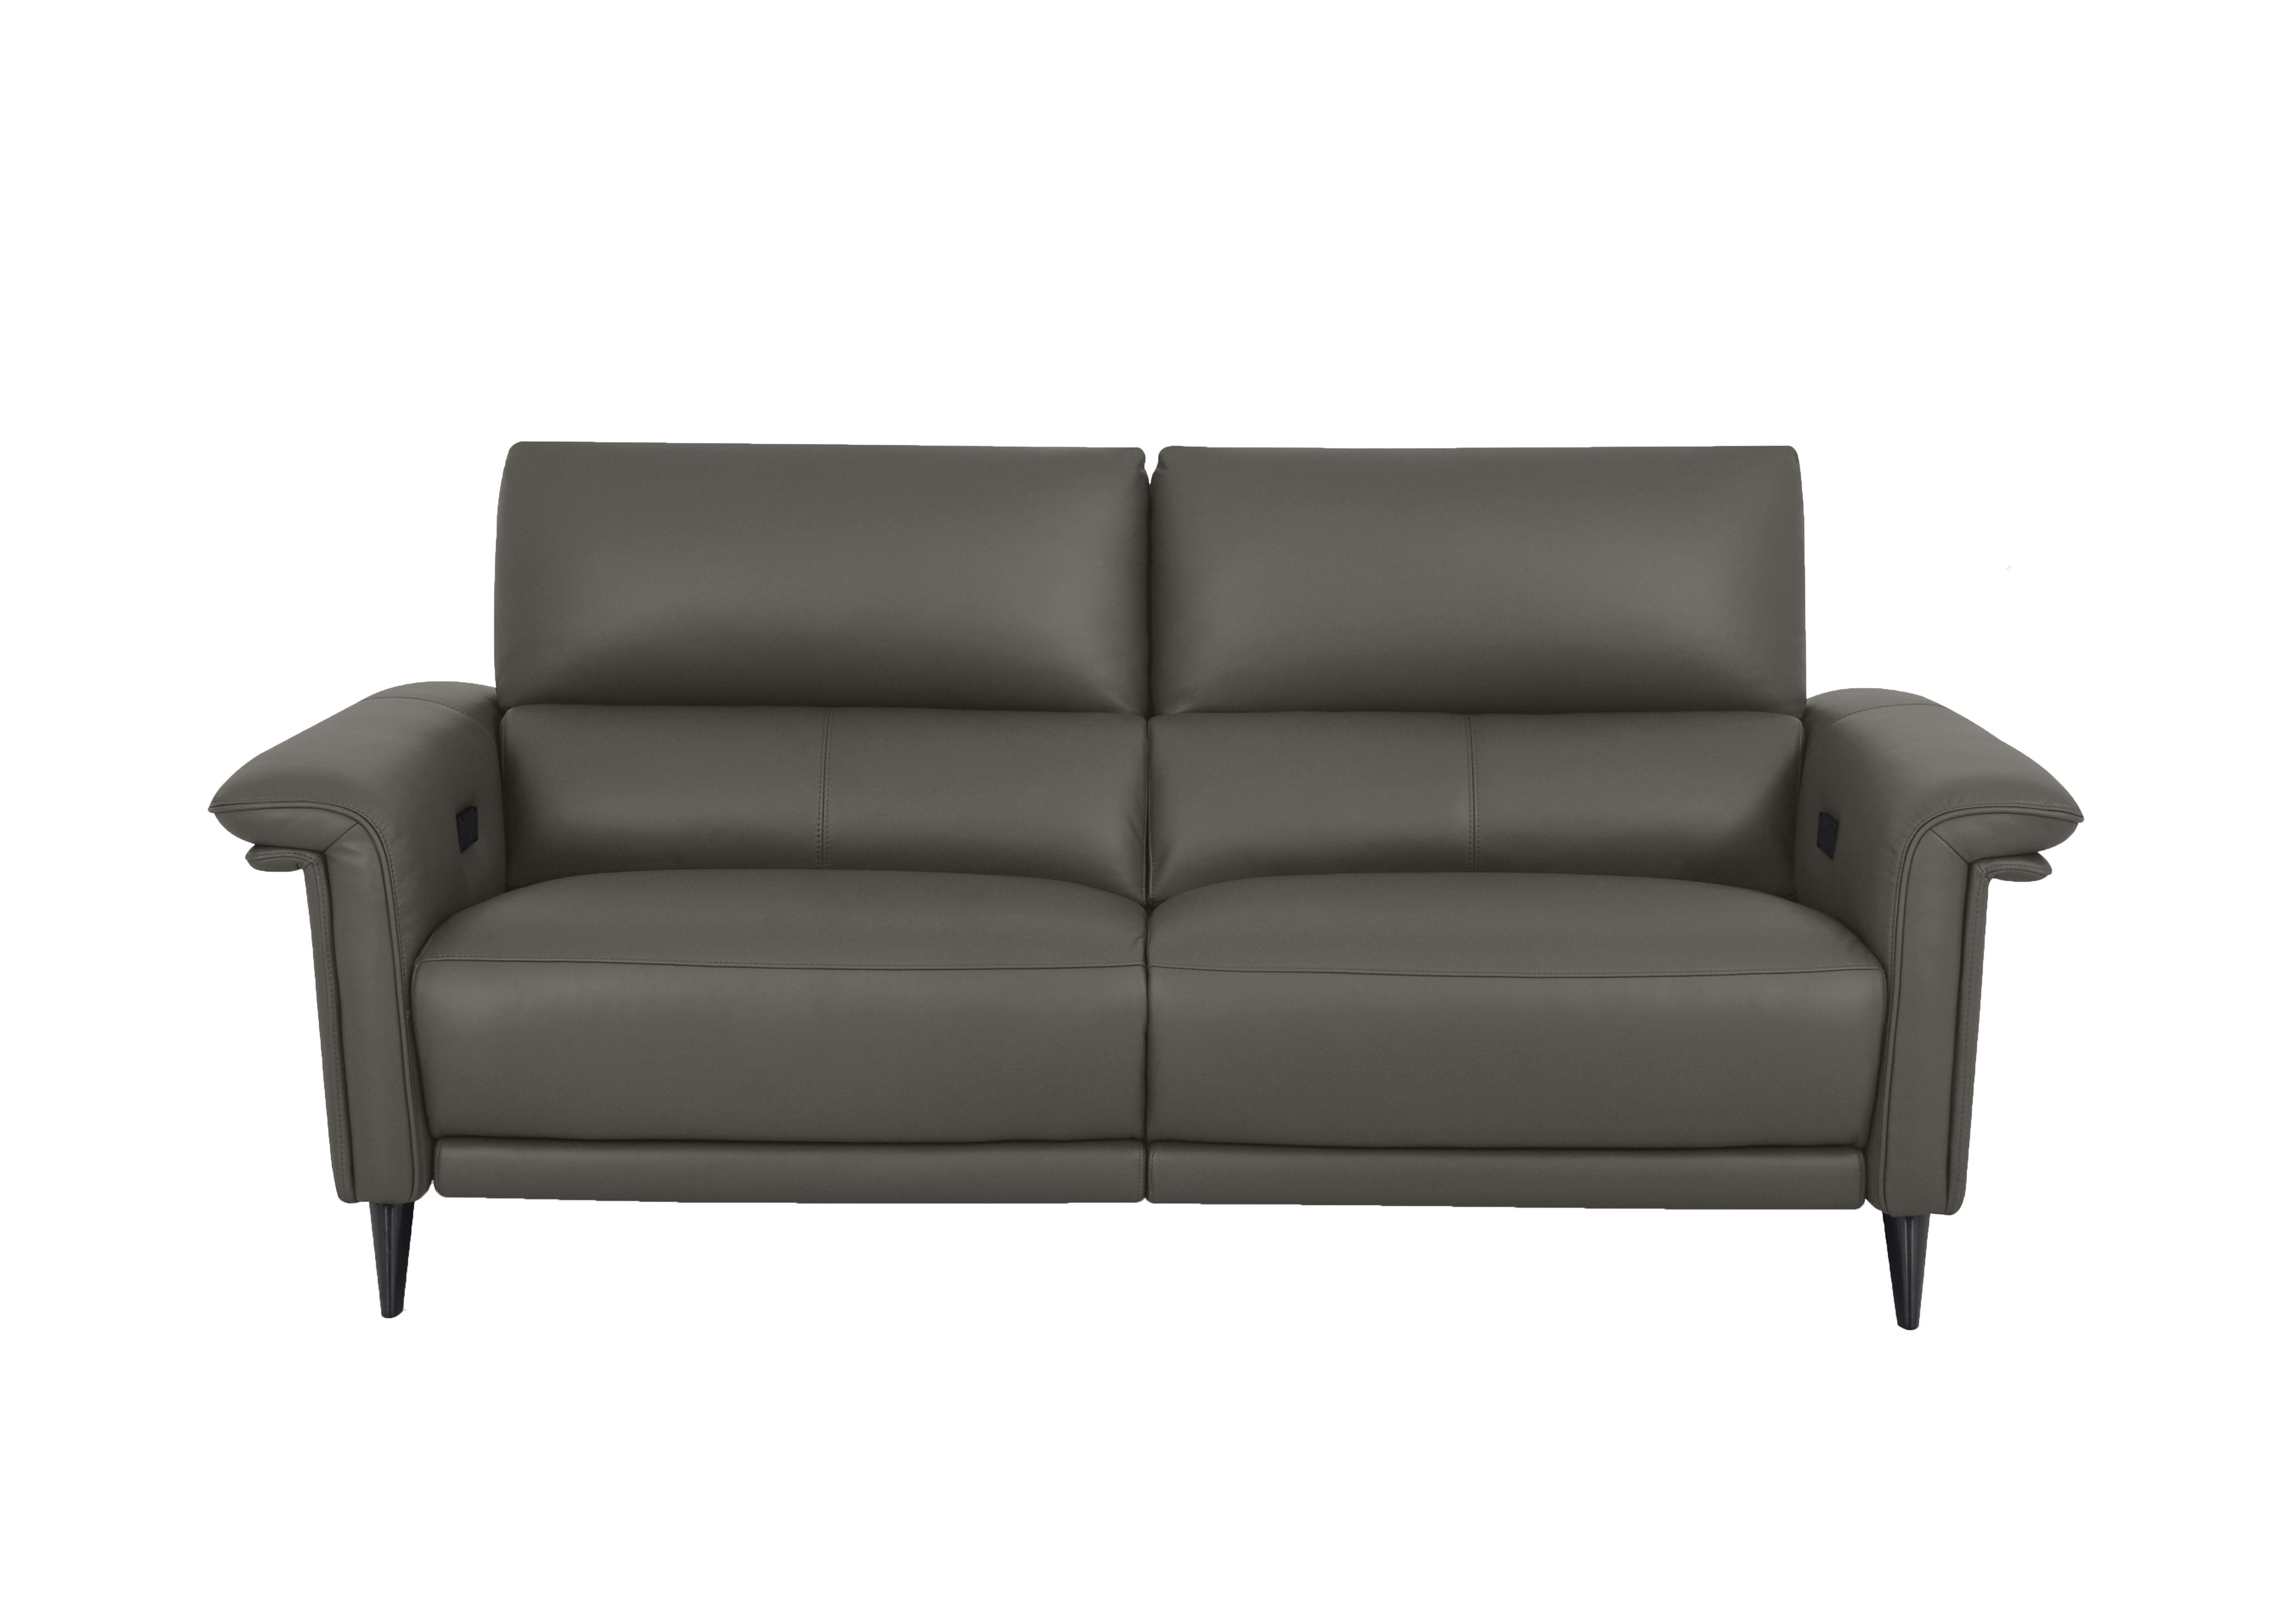 Huxley 3 Seater Leather Sofa in Nn-515e Elephant Grey on Furniture Village